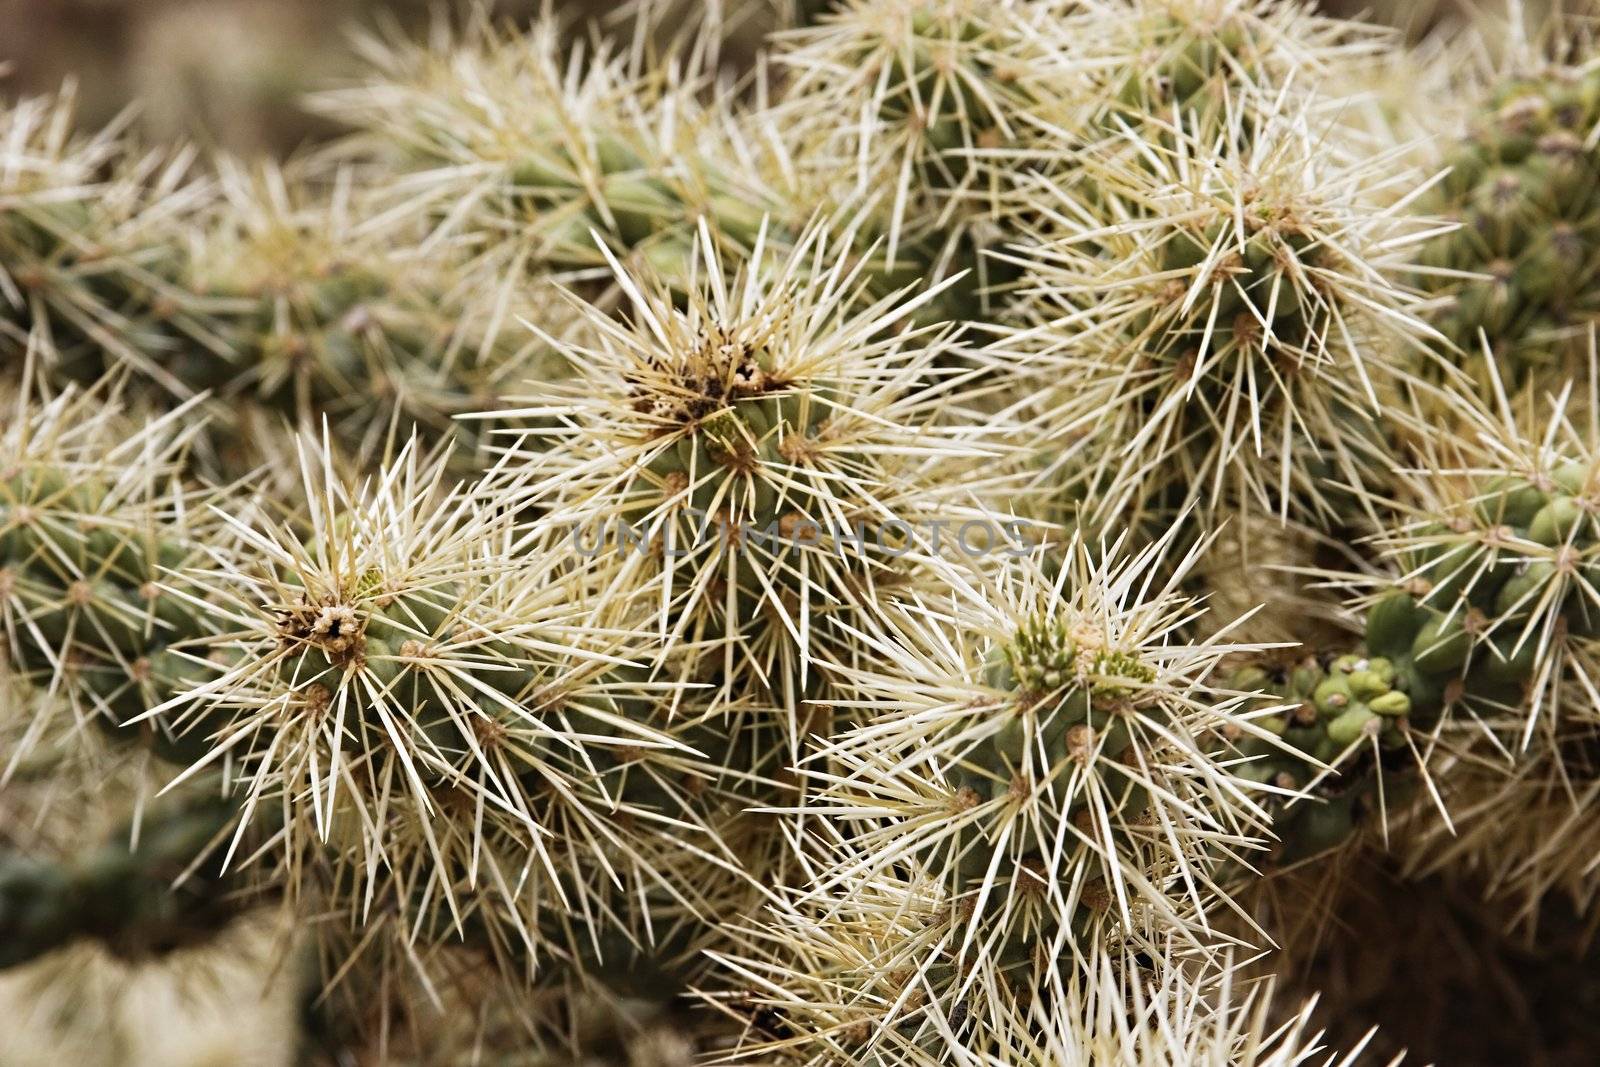 Cholla Cactus Close-Up by Creatista